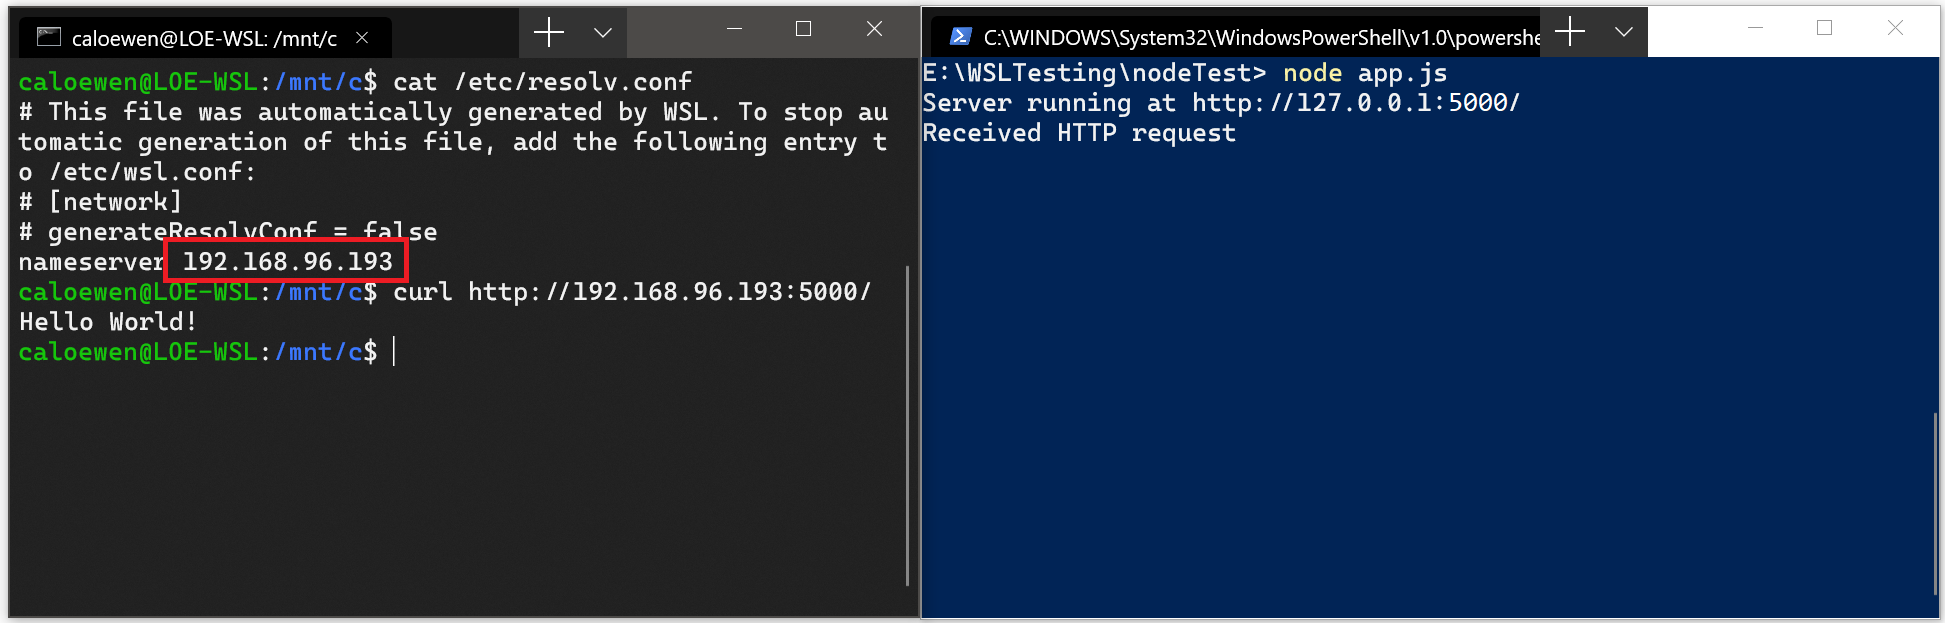 Conectar-se ao servidor NodeJS no Windows via Curl